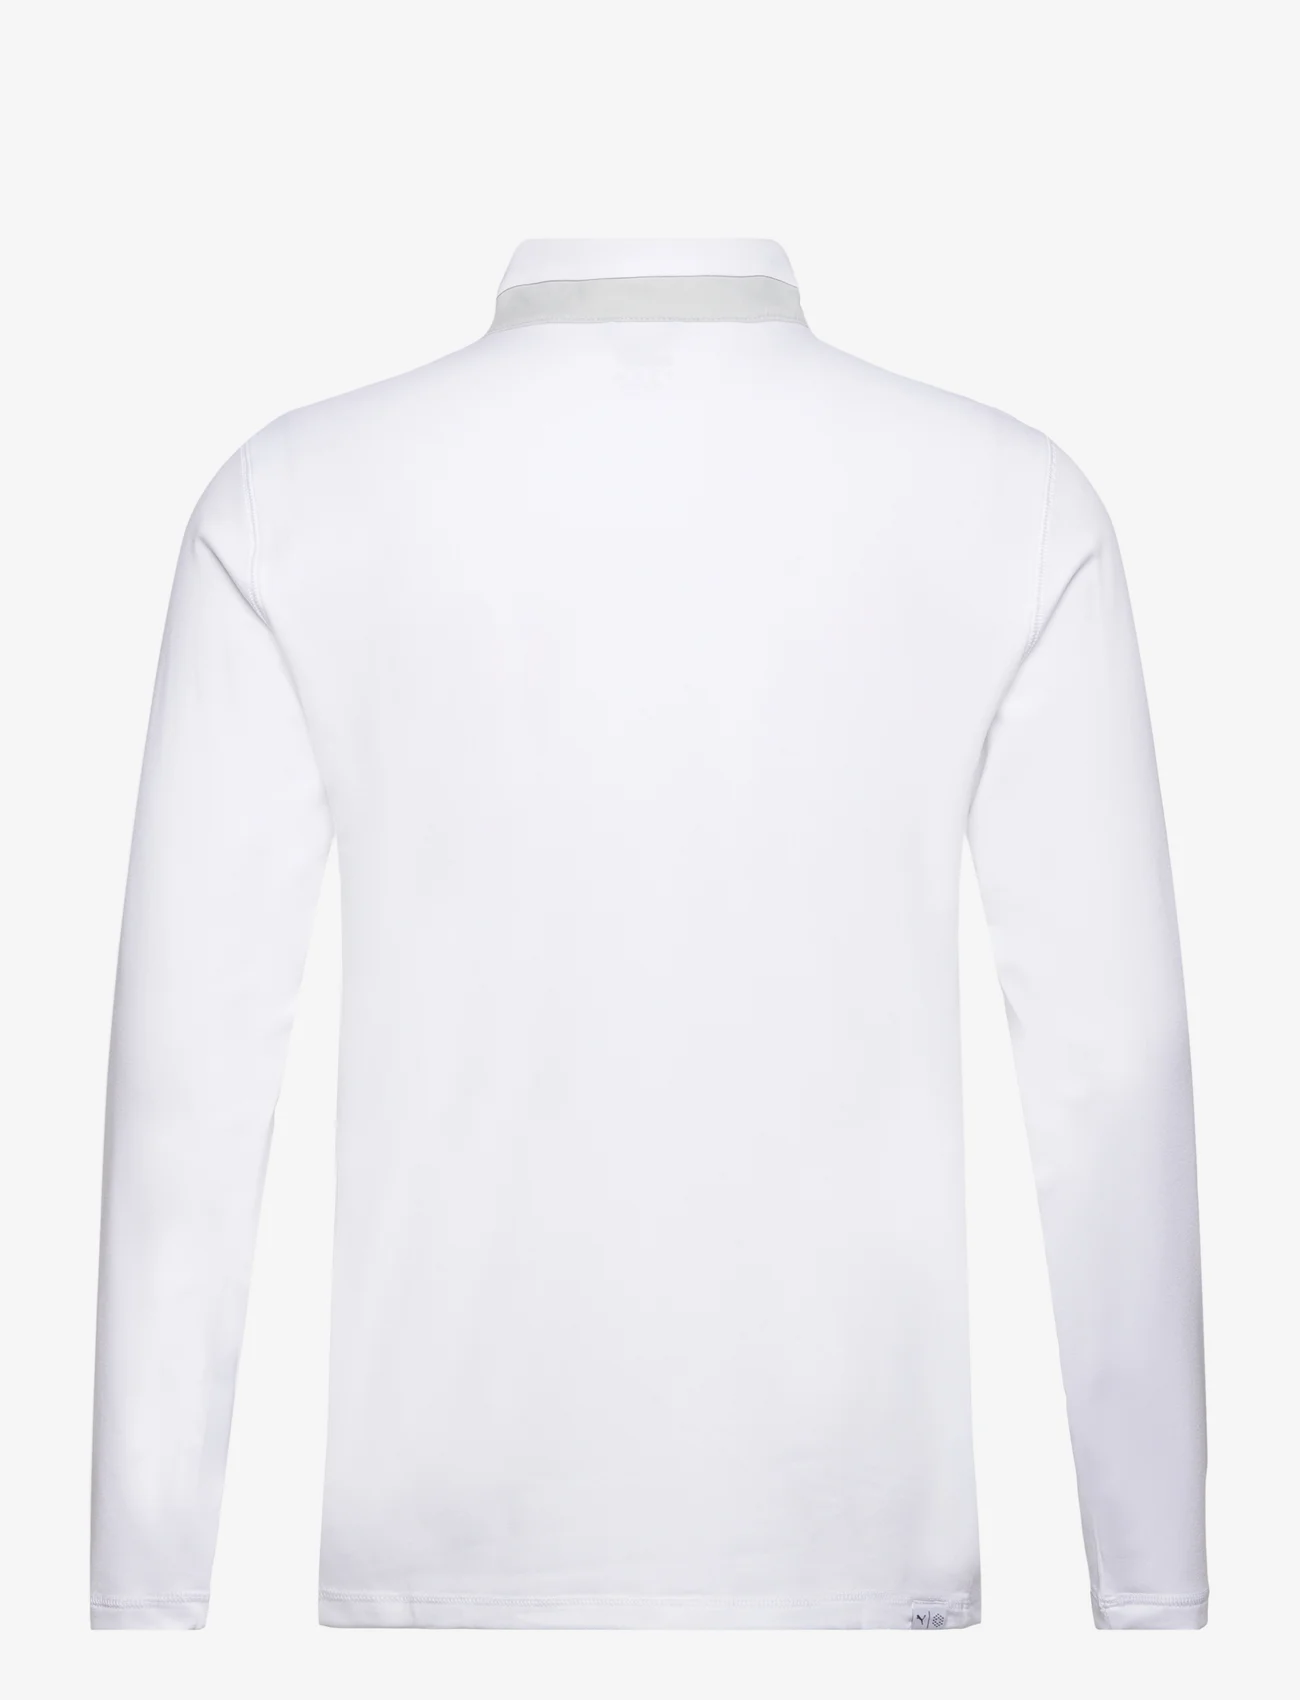 PUMA Golf - Lightweight 1/4 Zip - vahekihina kantavad jakid - white glow-ash gray - 1